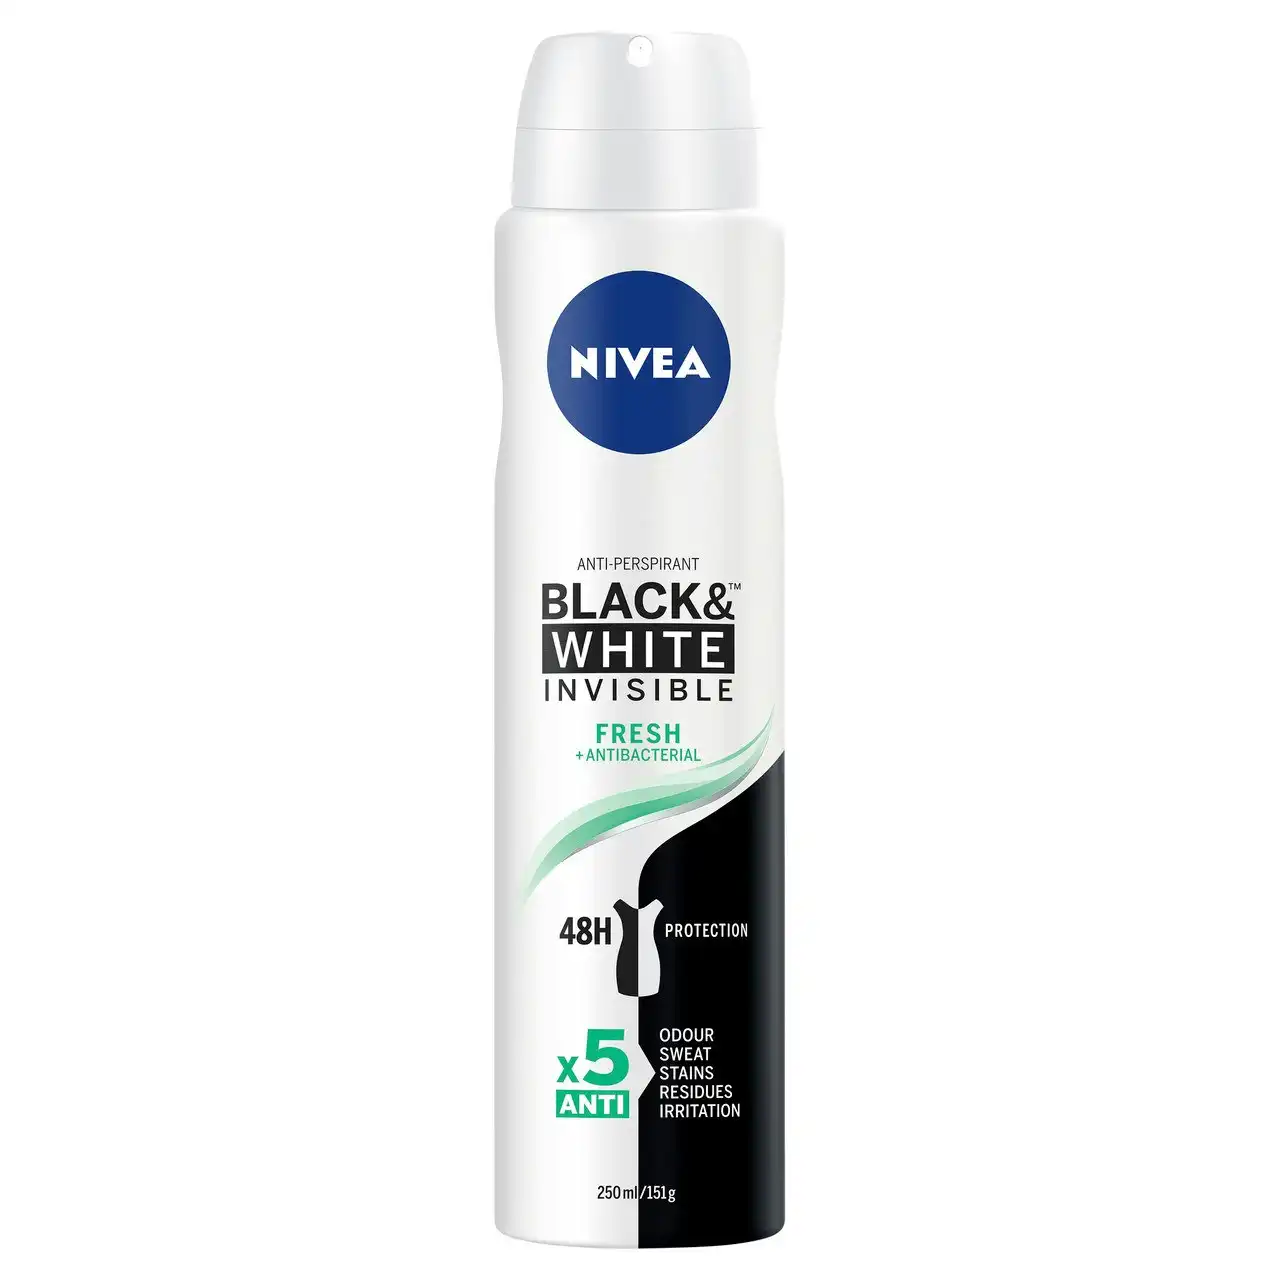 Nivea Black & White Invisible Fresh Anti-perspirant Aerosol Deodorant 250ml